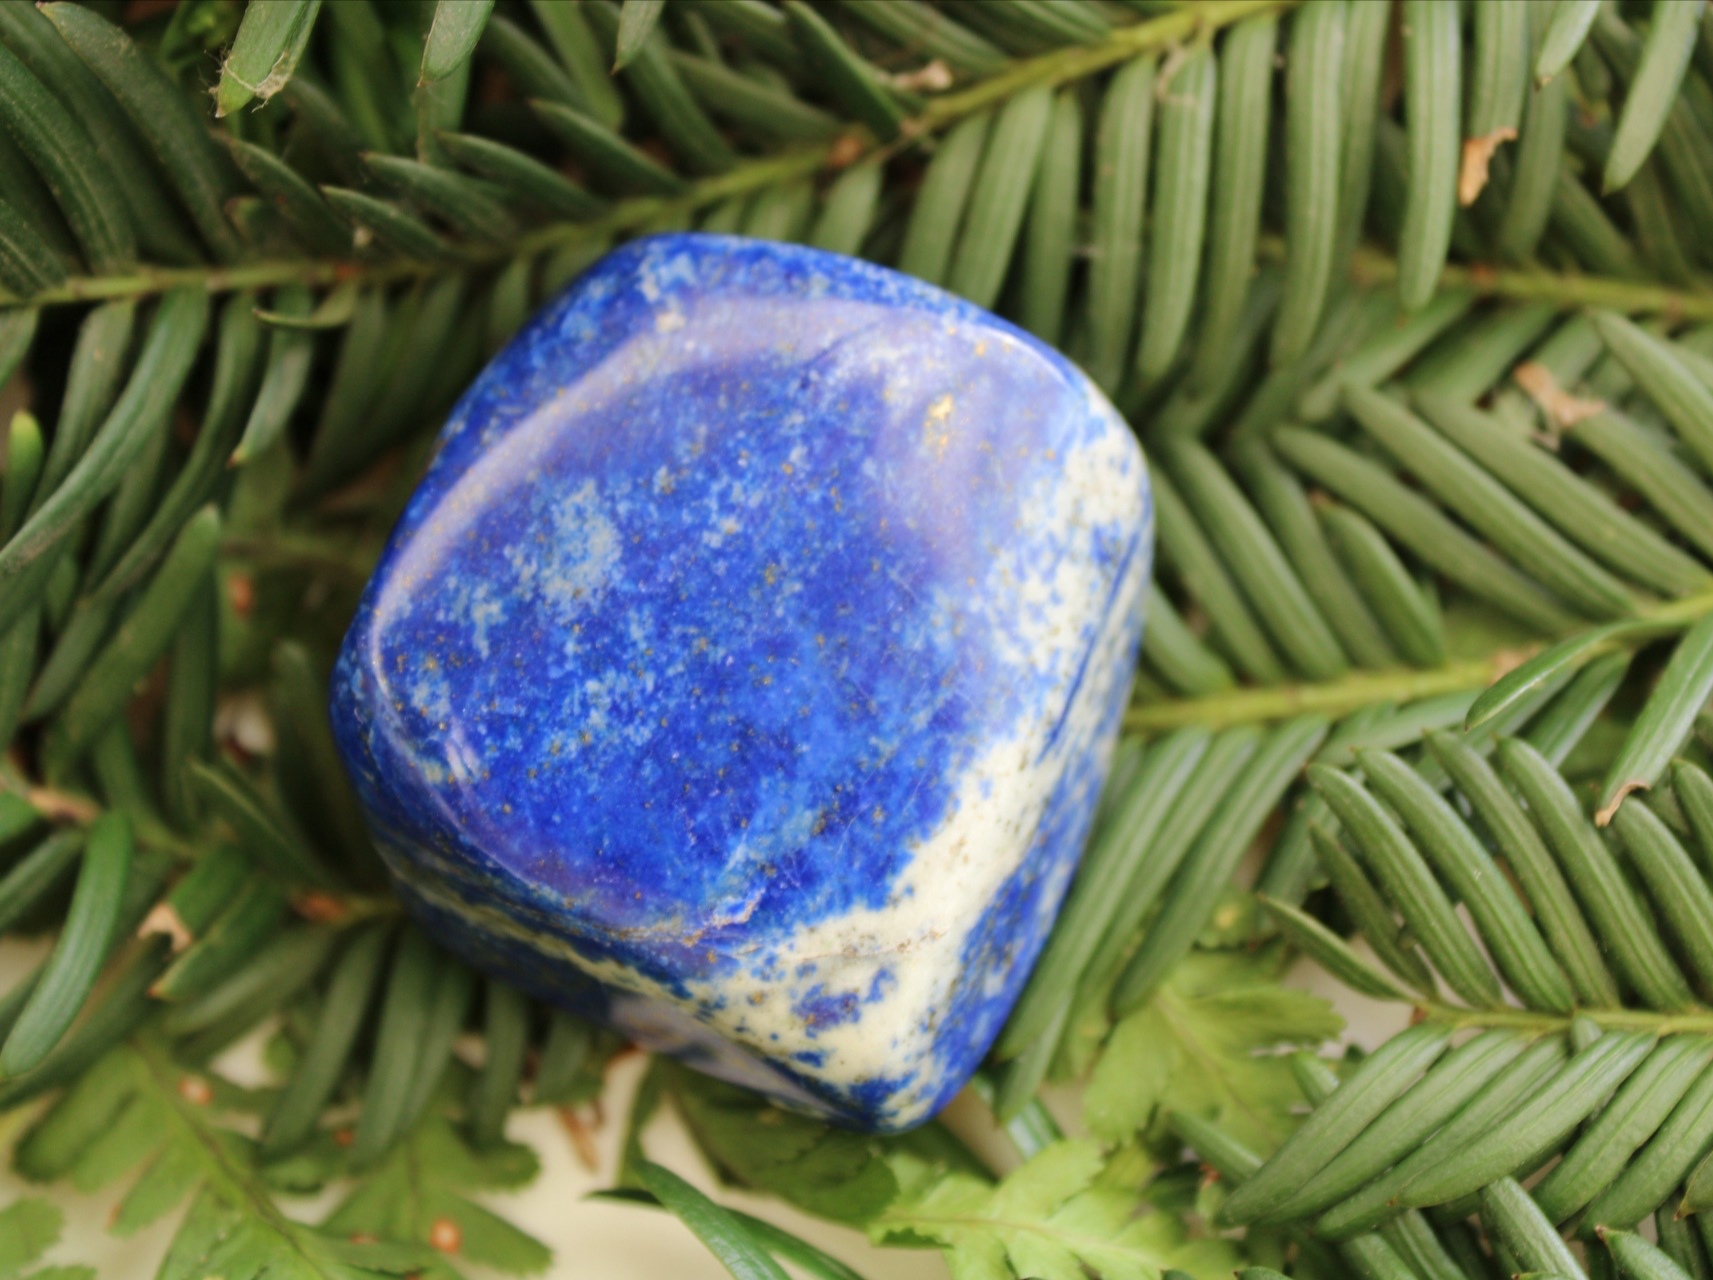 pierre-polie-lapis-lazuli-extra-mineraux